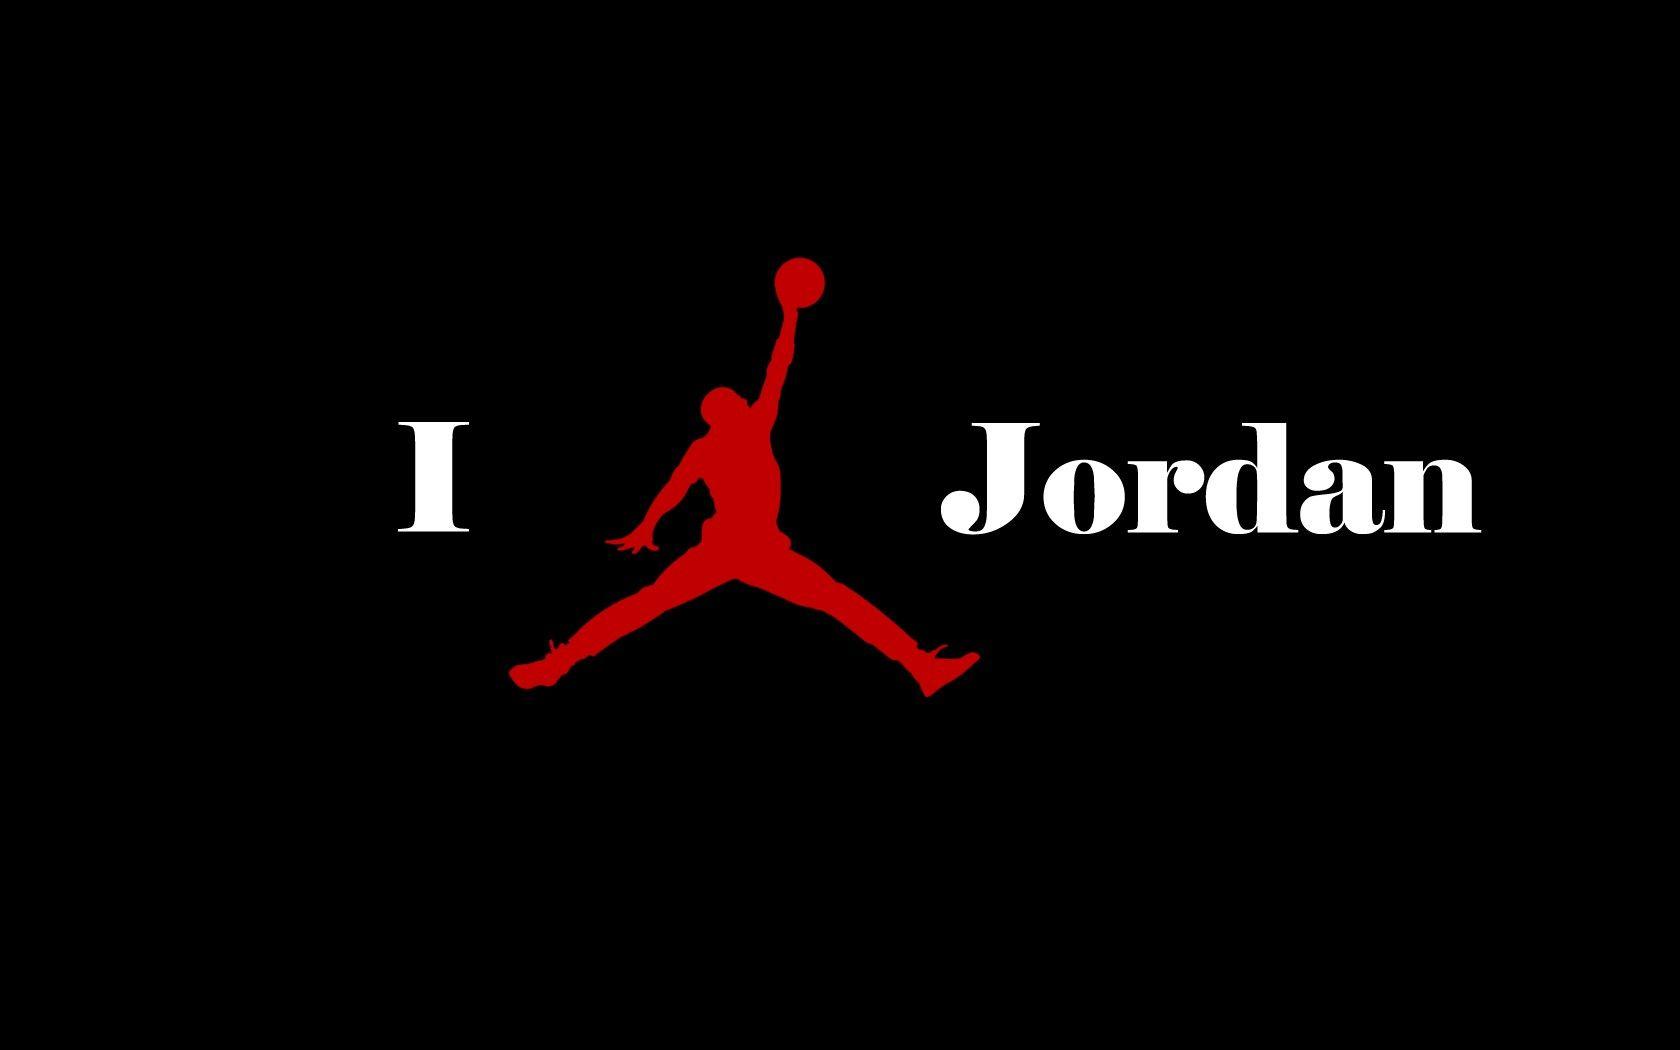 Michael Jordan Logo Wallpaper Widescreen 2 HD Wallpaper. Hdimges